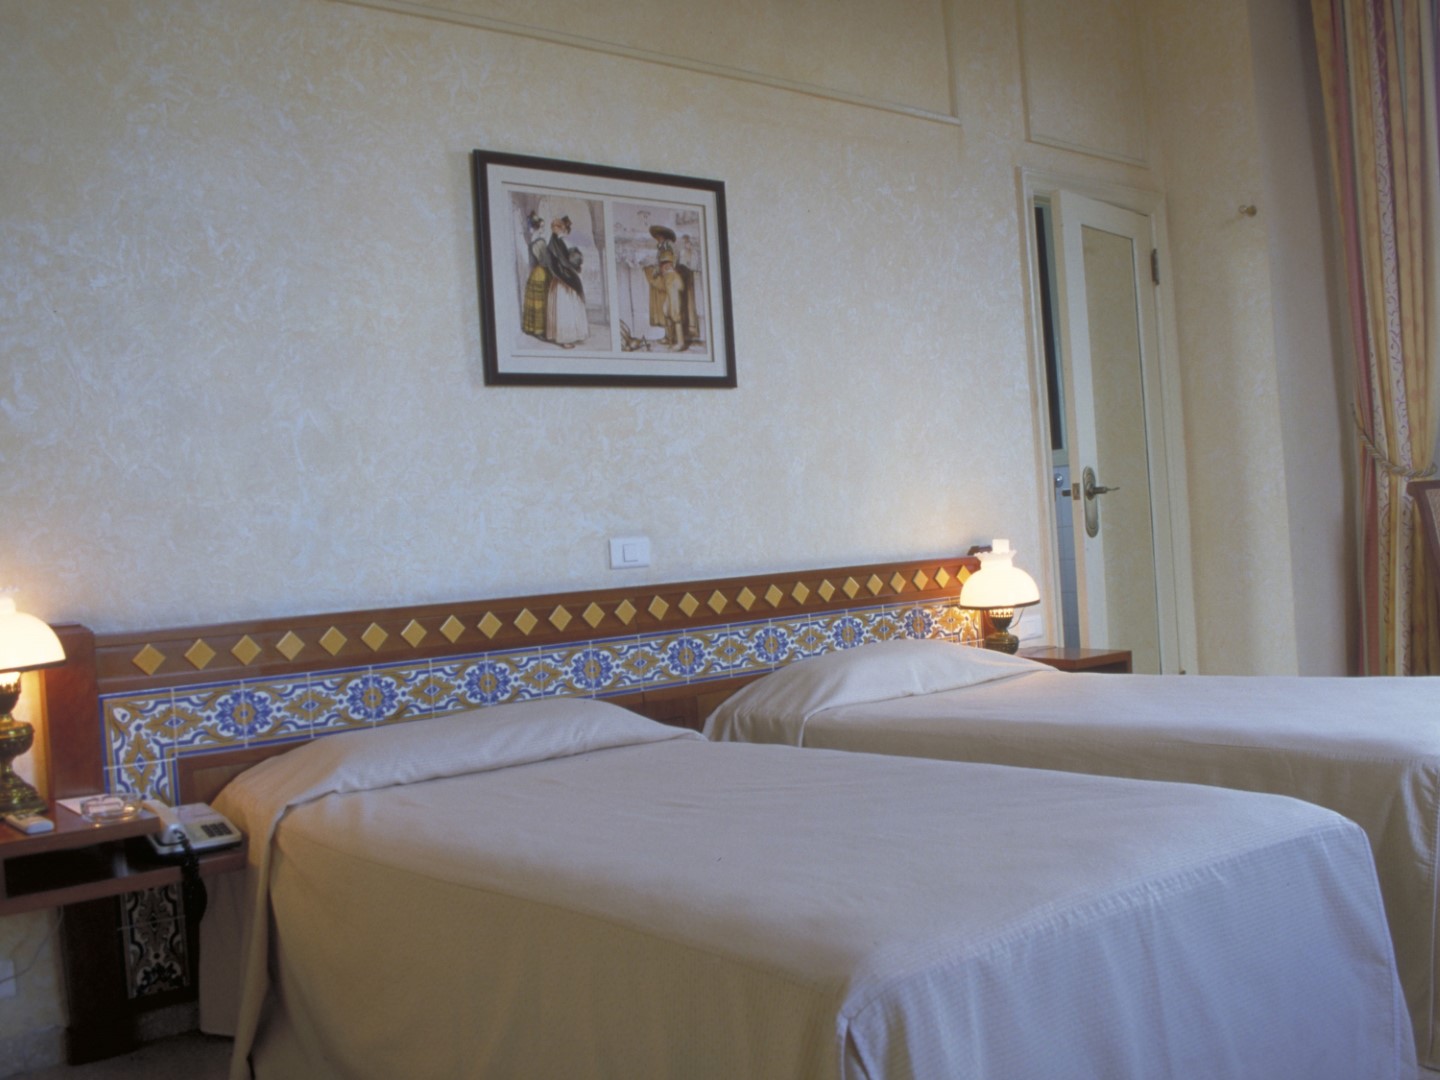 Hotel Sevilla twin bedded room, Havana